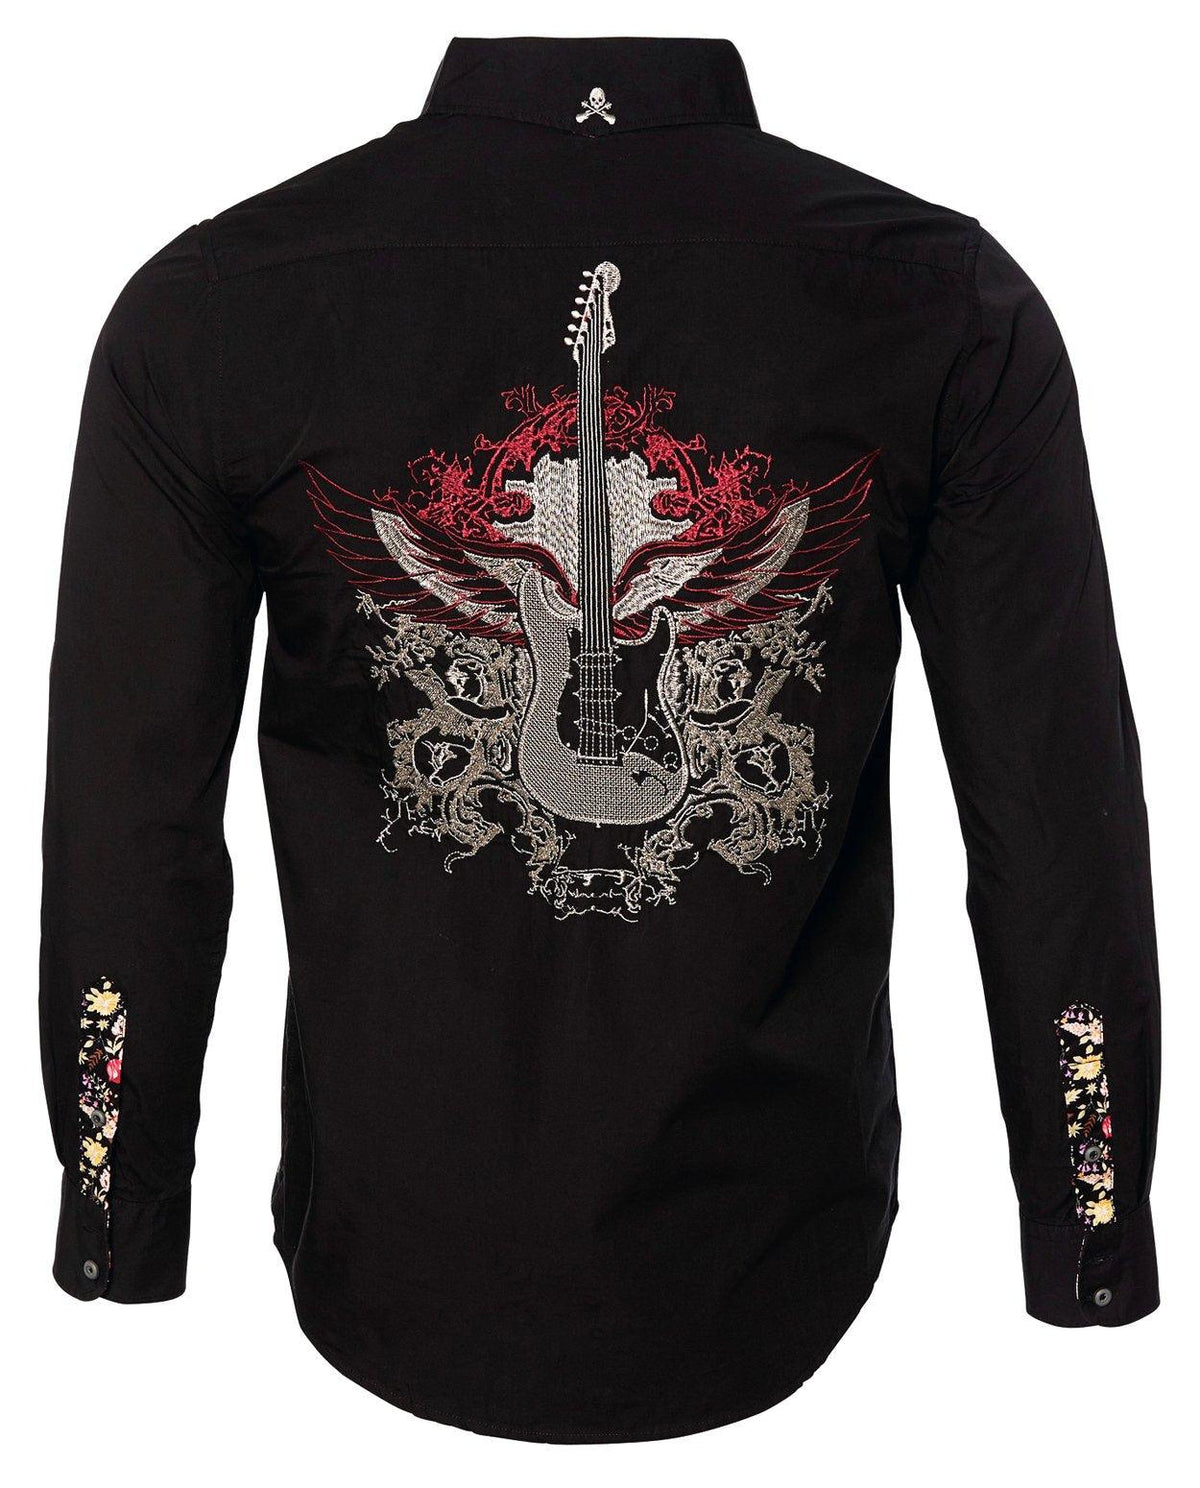 Rock Roll n Soul Guitar Wings Black Shirt - Flyclothing LLC